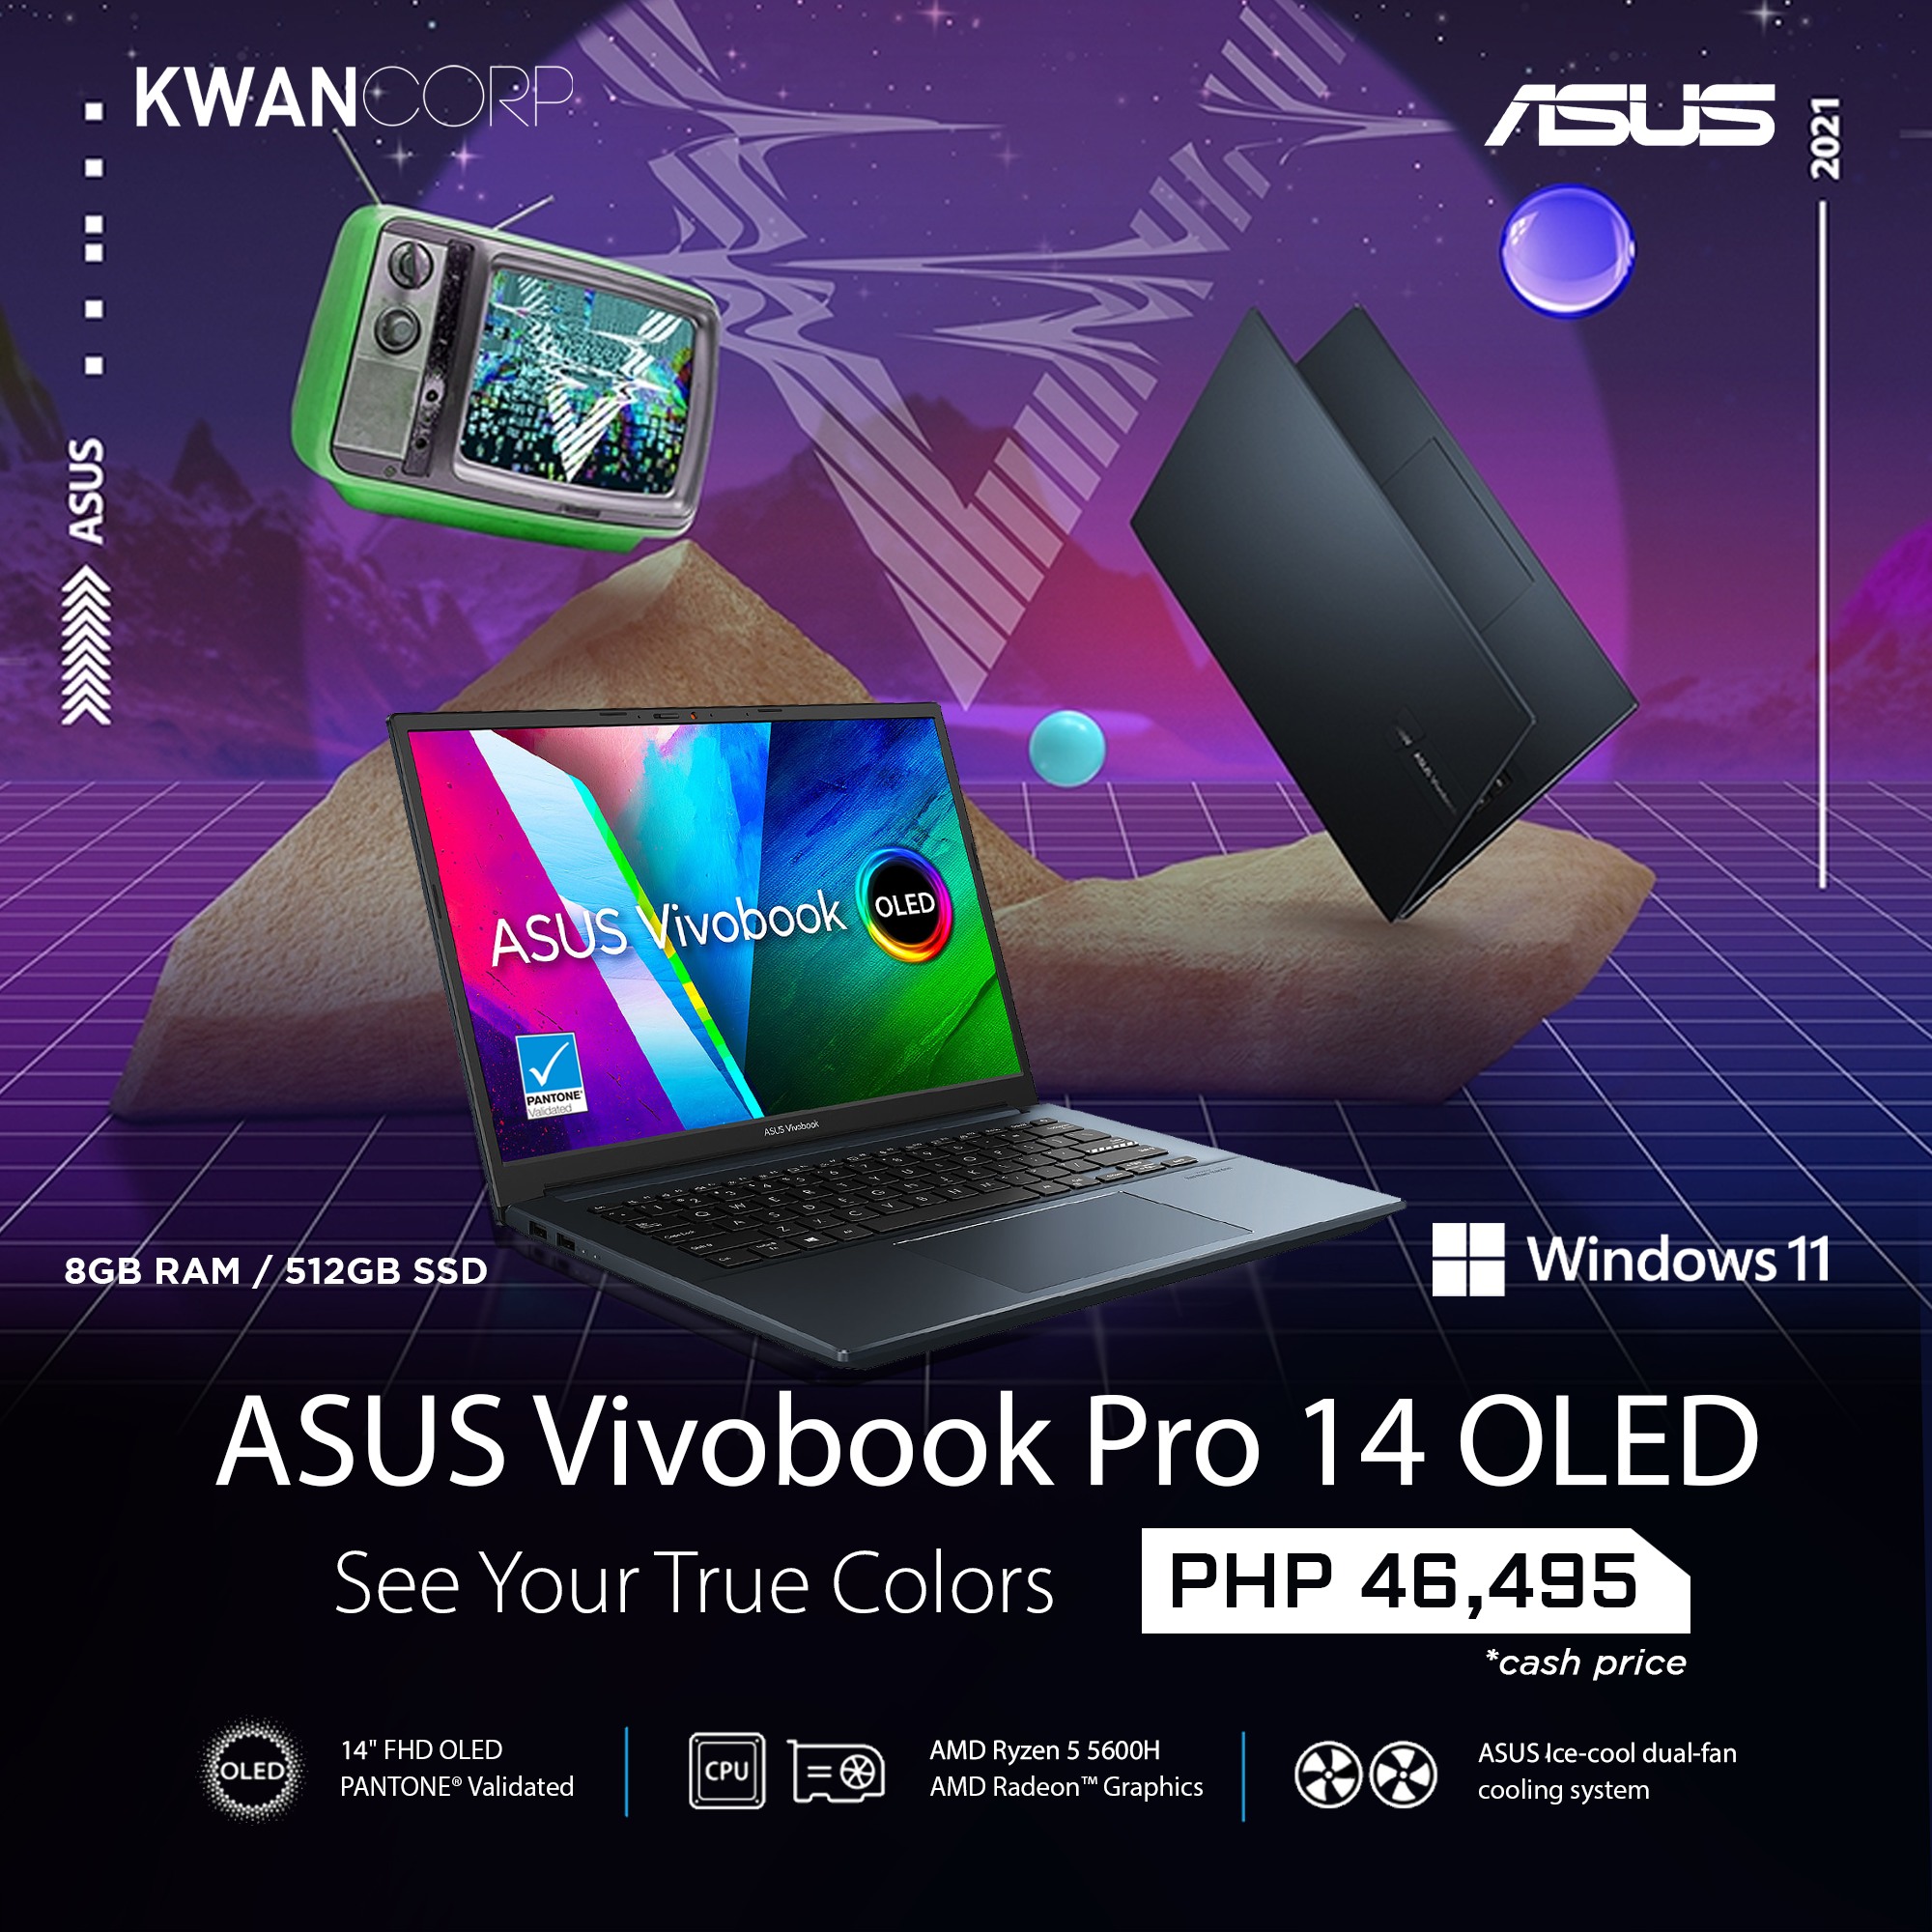 ASUS VivoBook Pro 14 OLED PH PRICE 4